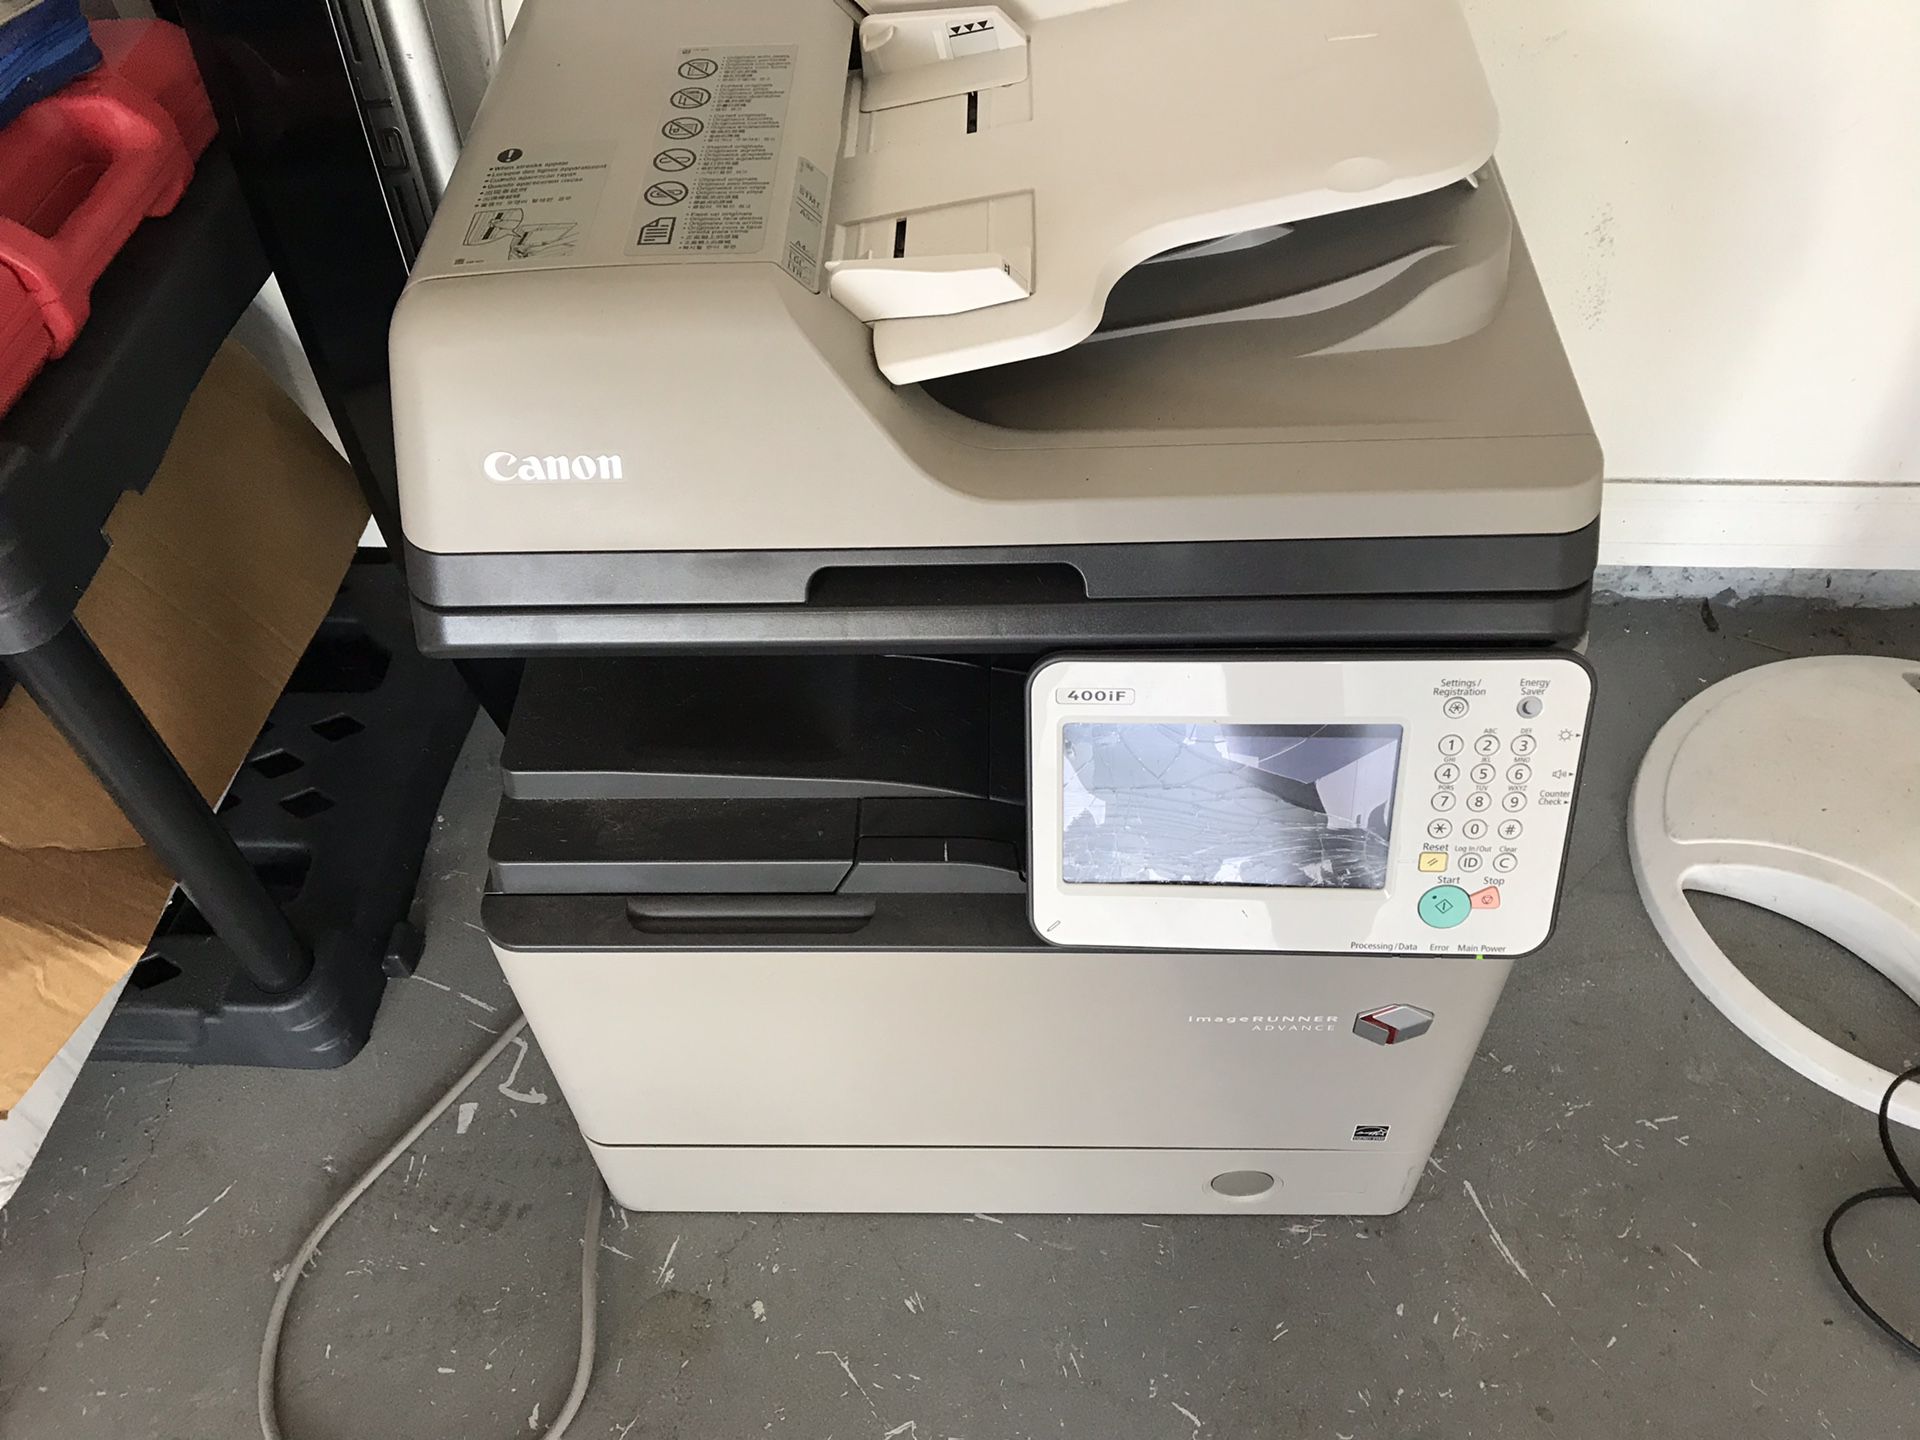 Canon Image Runner 400if Wireless Printer/Copier